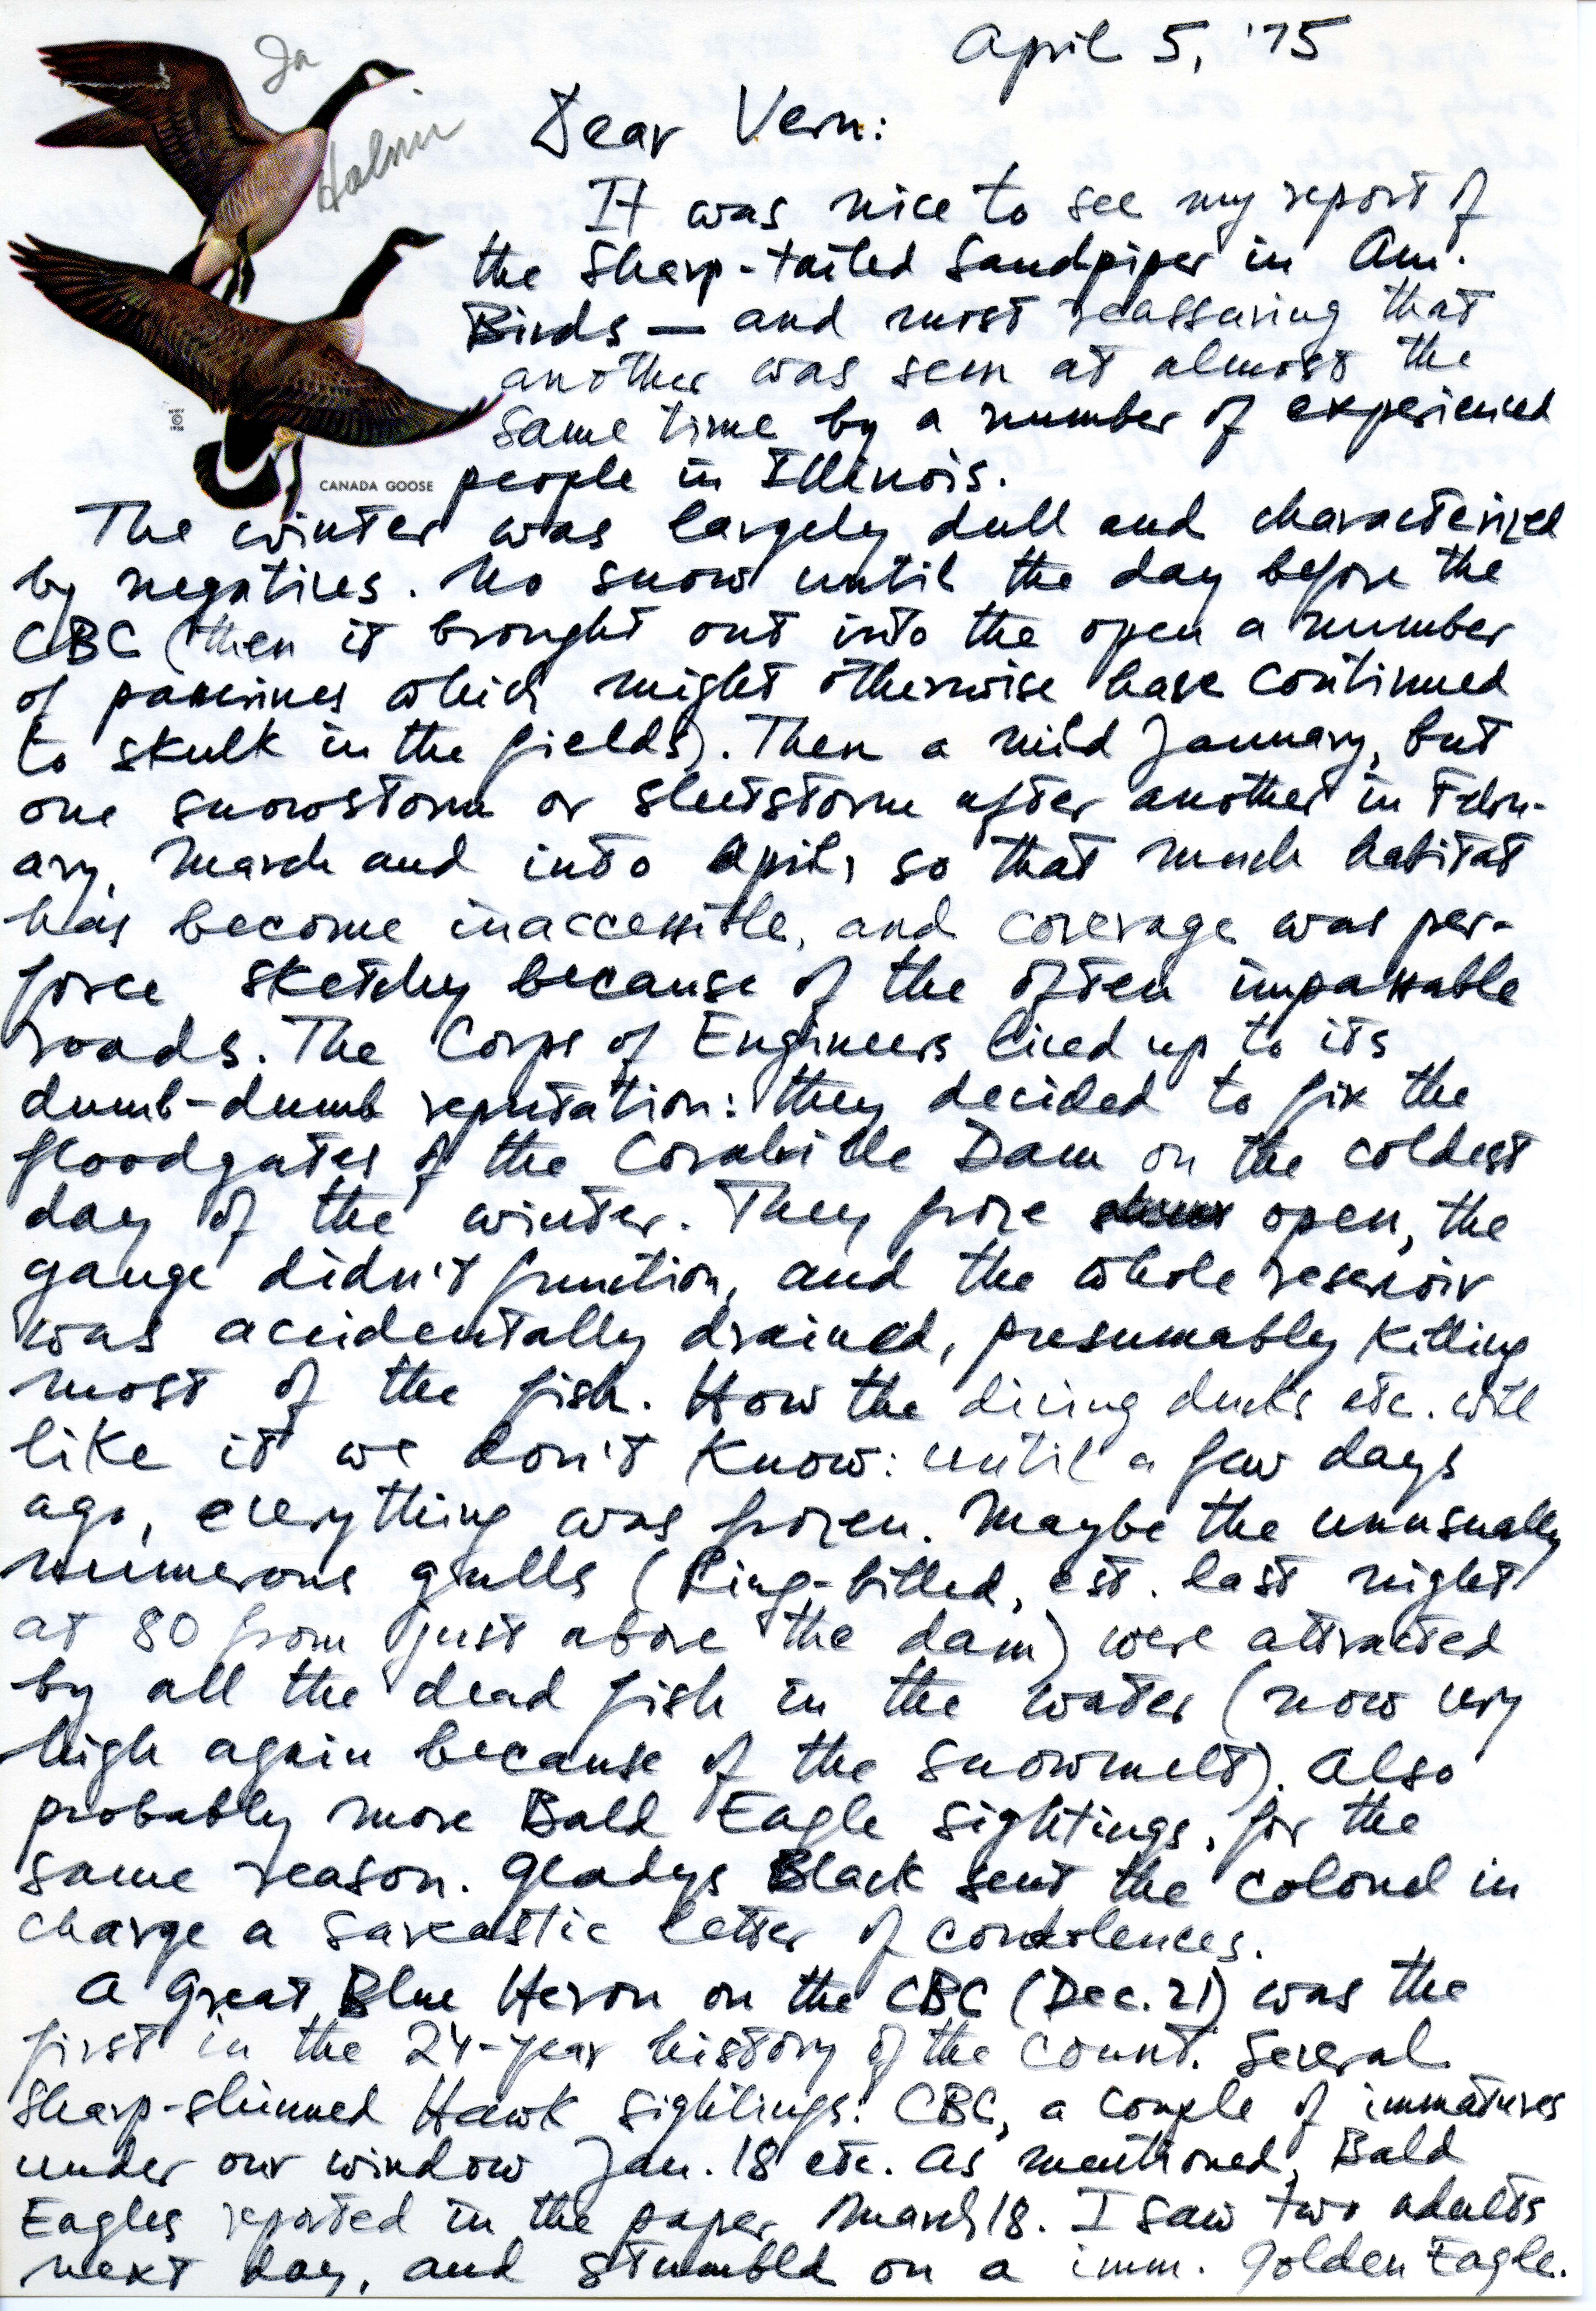 Nicholas S. Halmi letter to Vernon M. Kleen regarding birds sighted around Iowa City during winter season, April 5, 1975